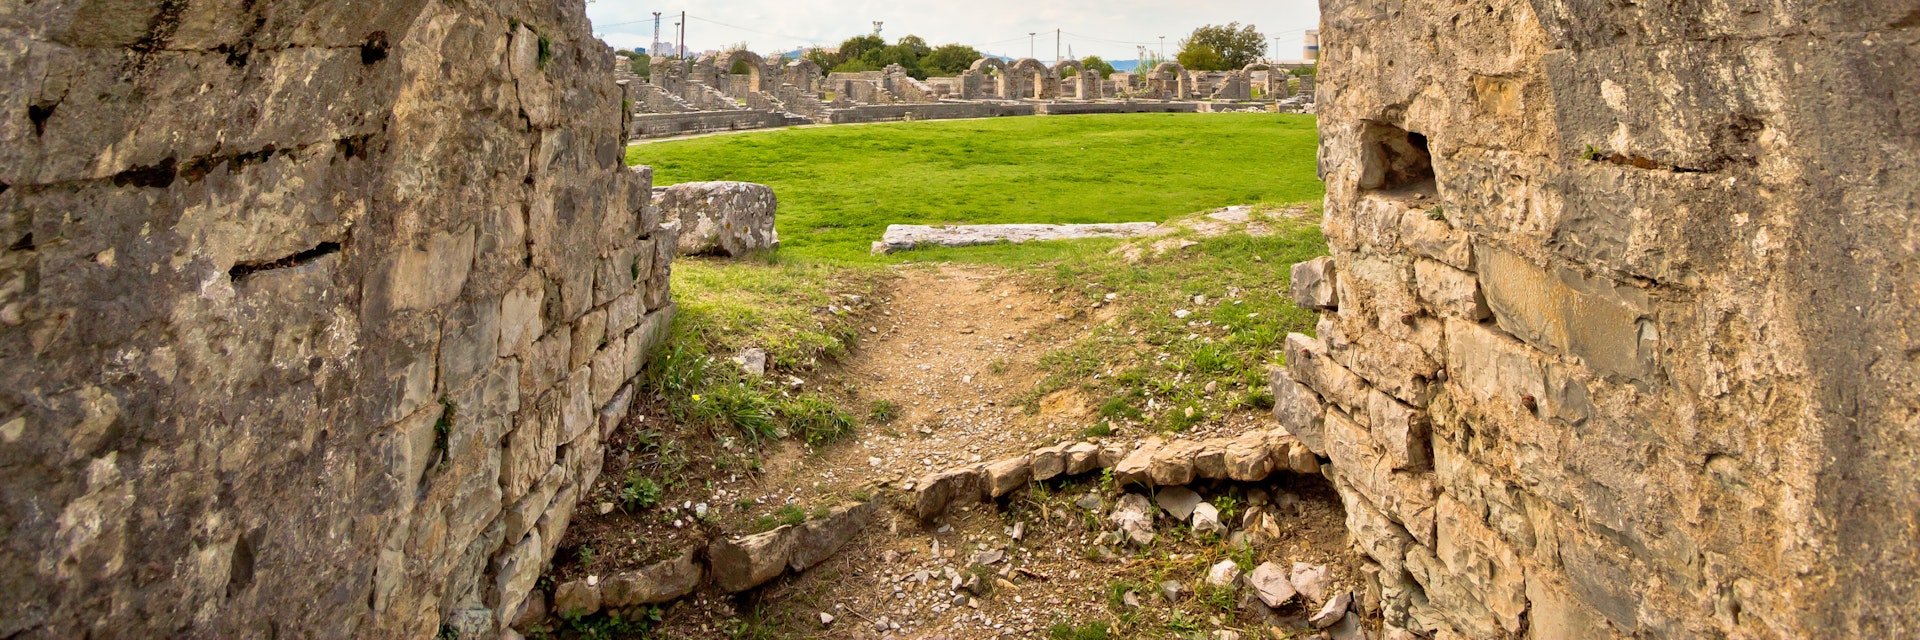 500px Photo ID: 130117679 - Solin ancient arena old ruins, Dalmatia, Croatia